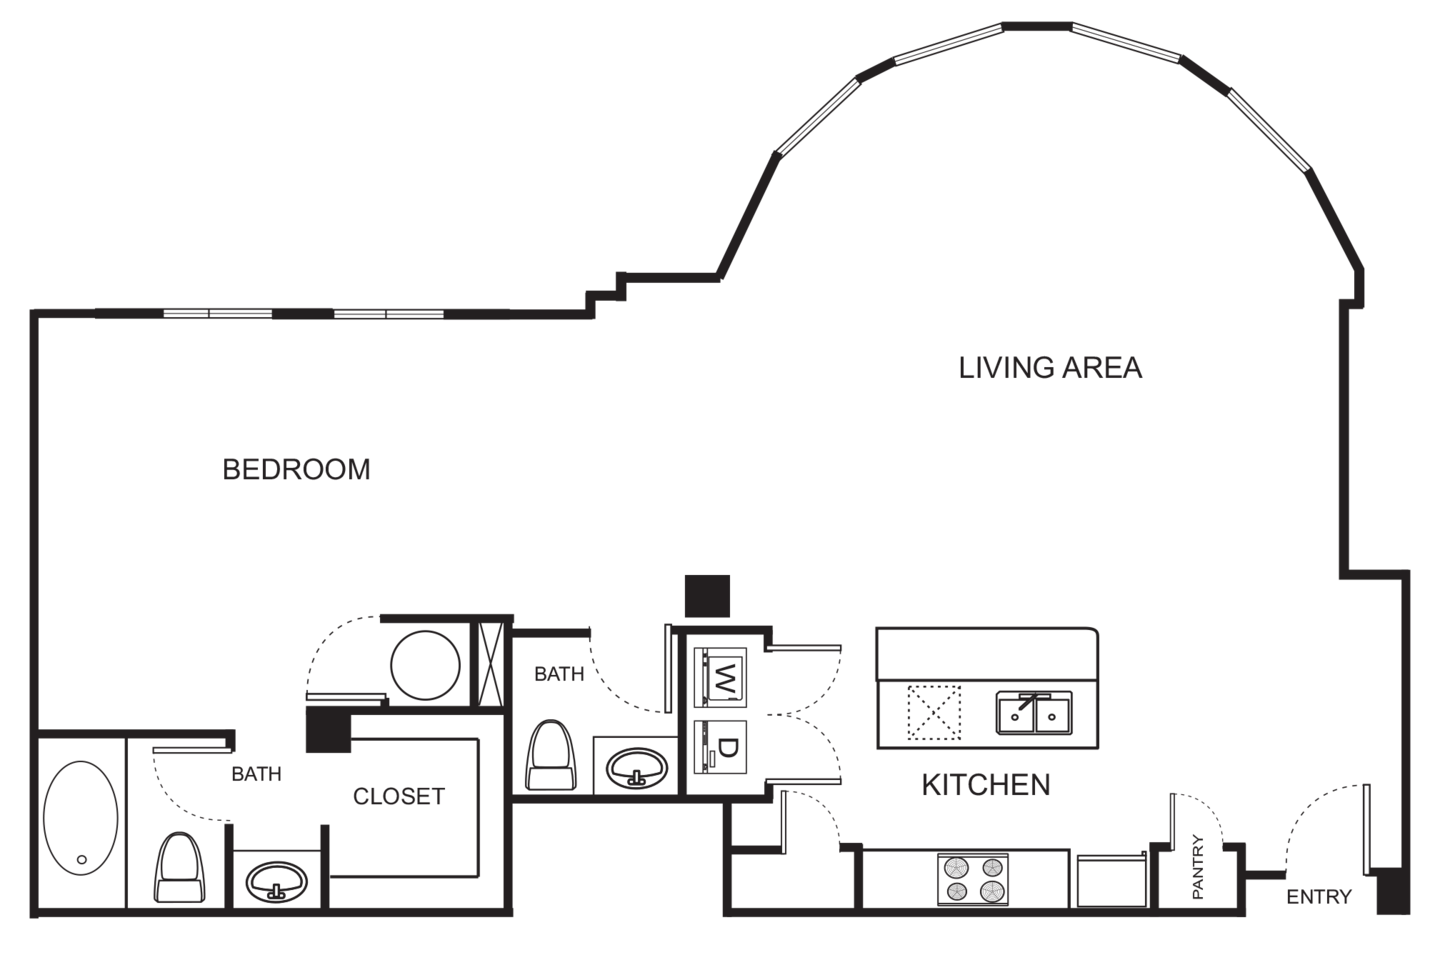 Floorplan diagram for Indi 6-A Studio, showing Studio